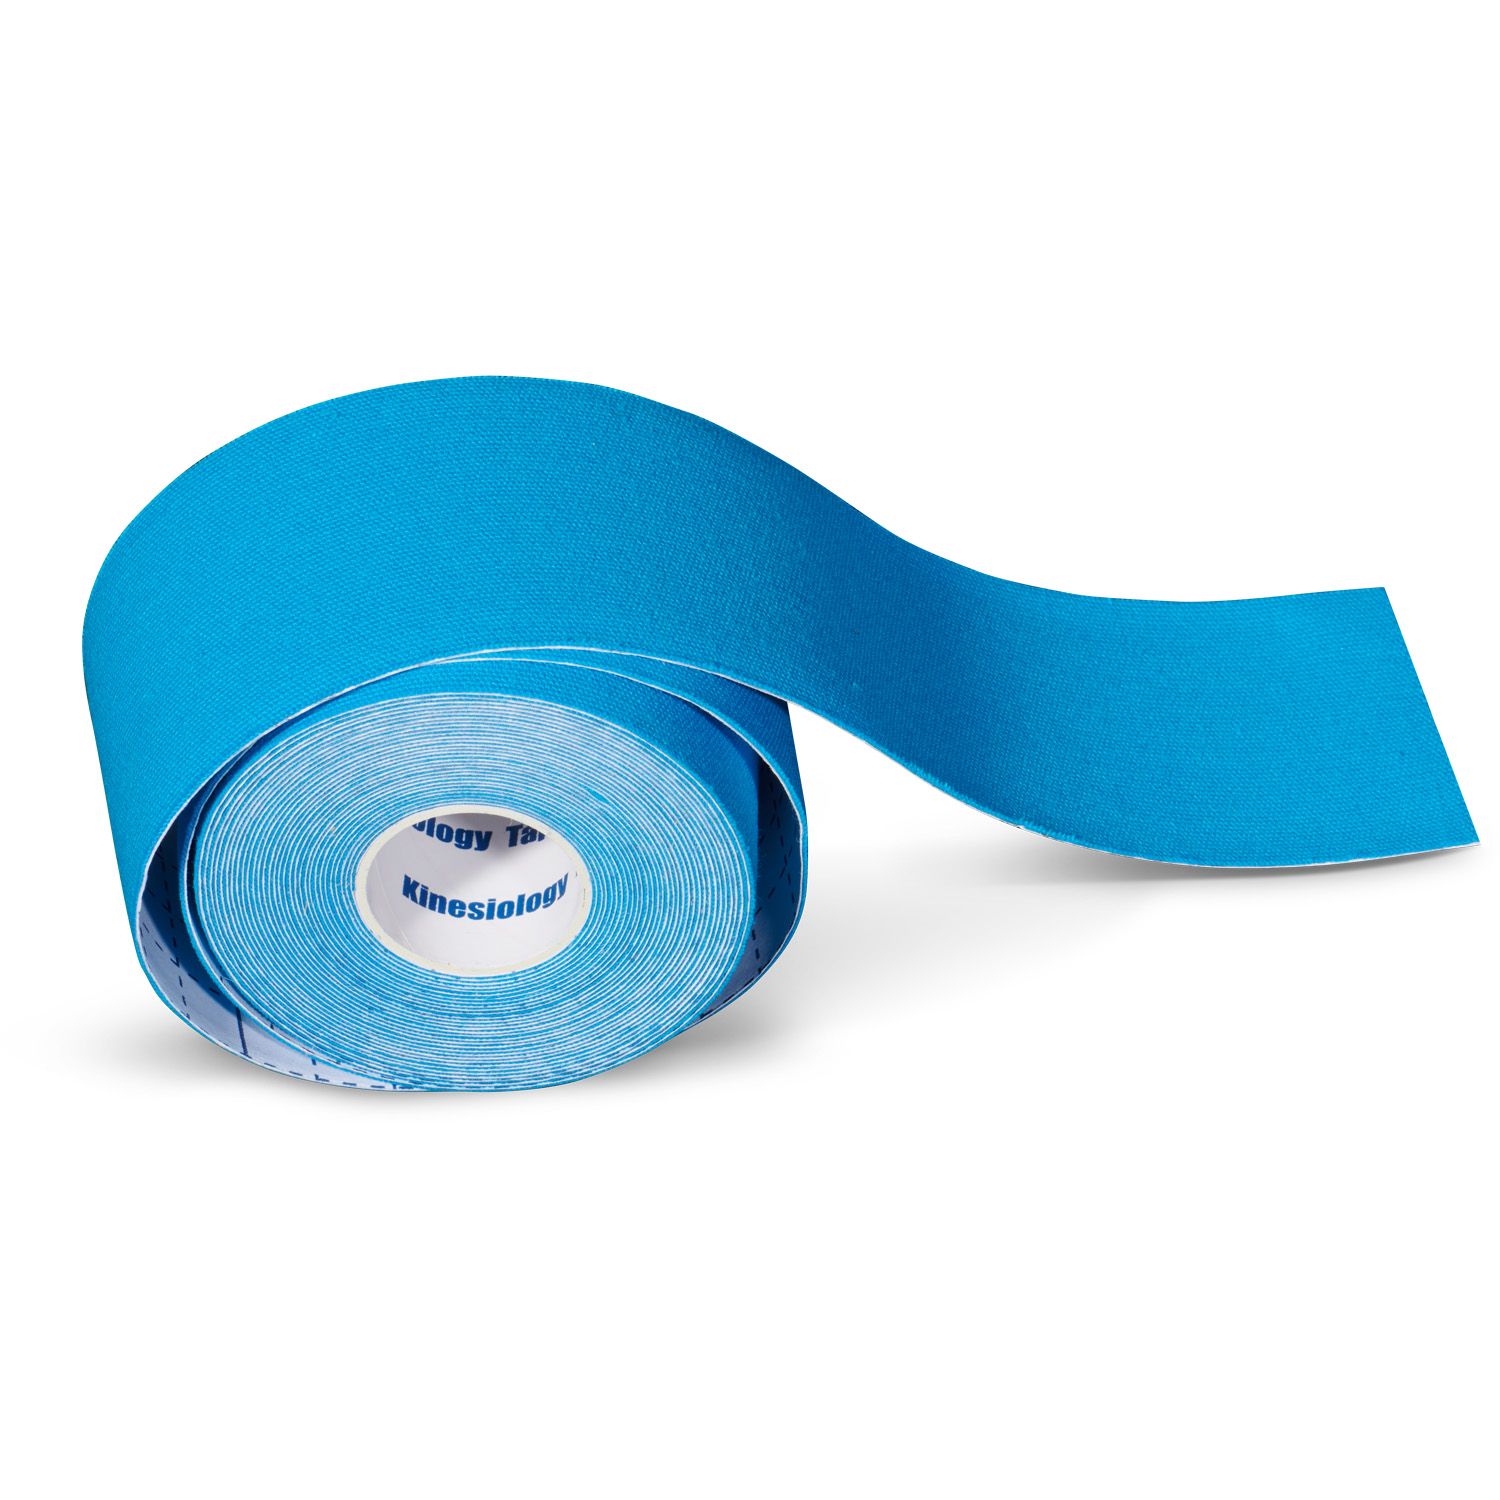 Kinesiology tape per roll blue 